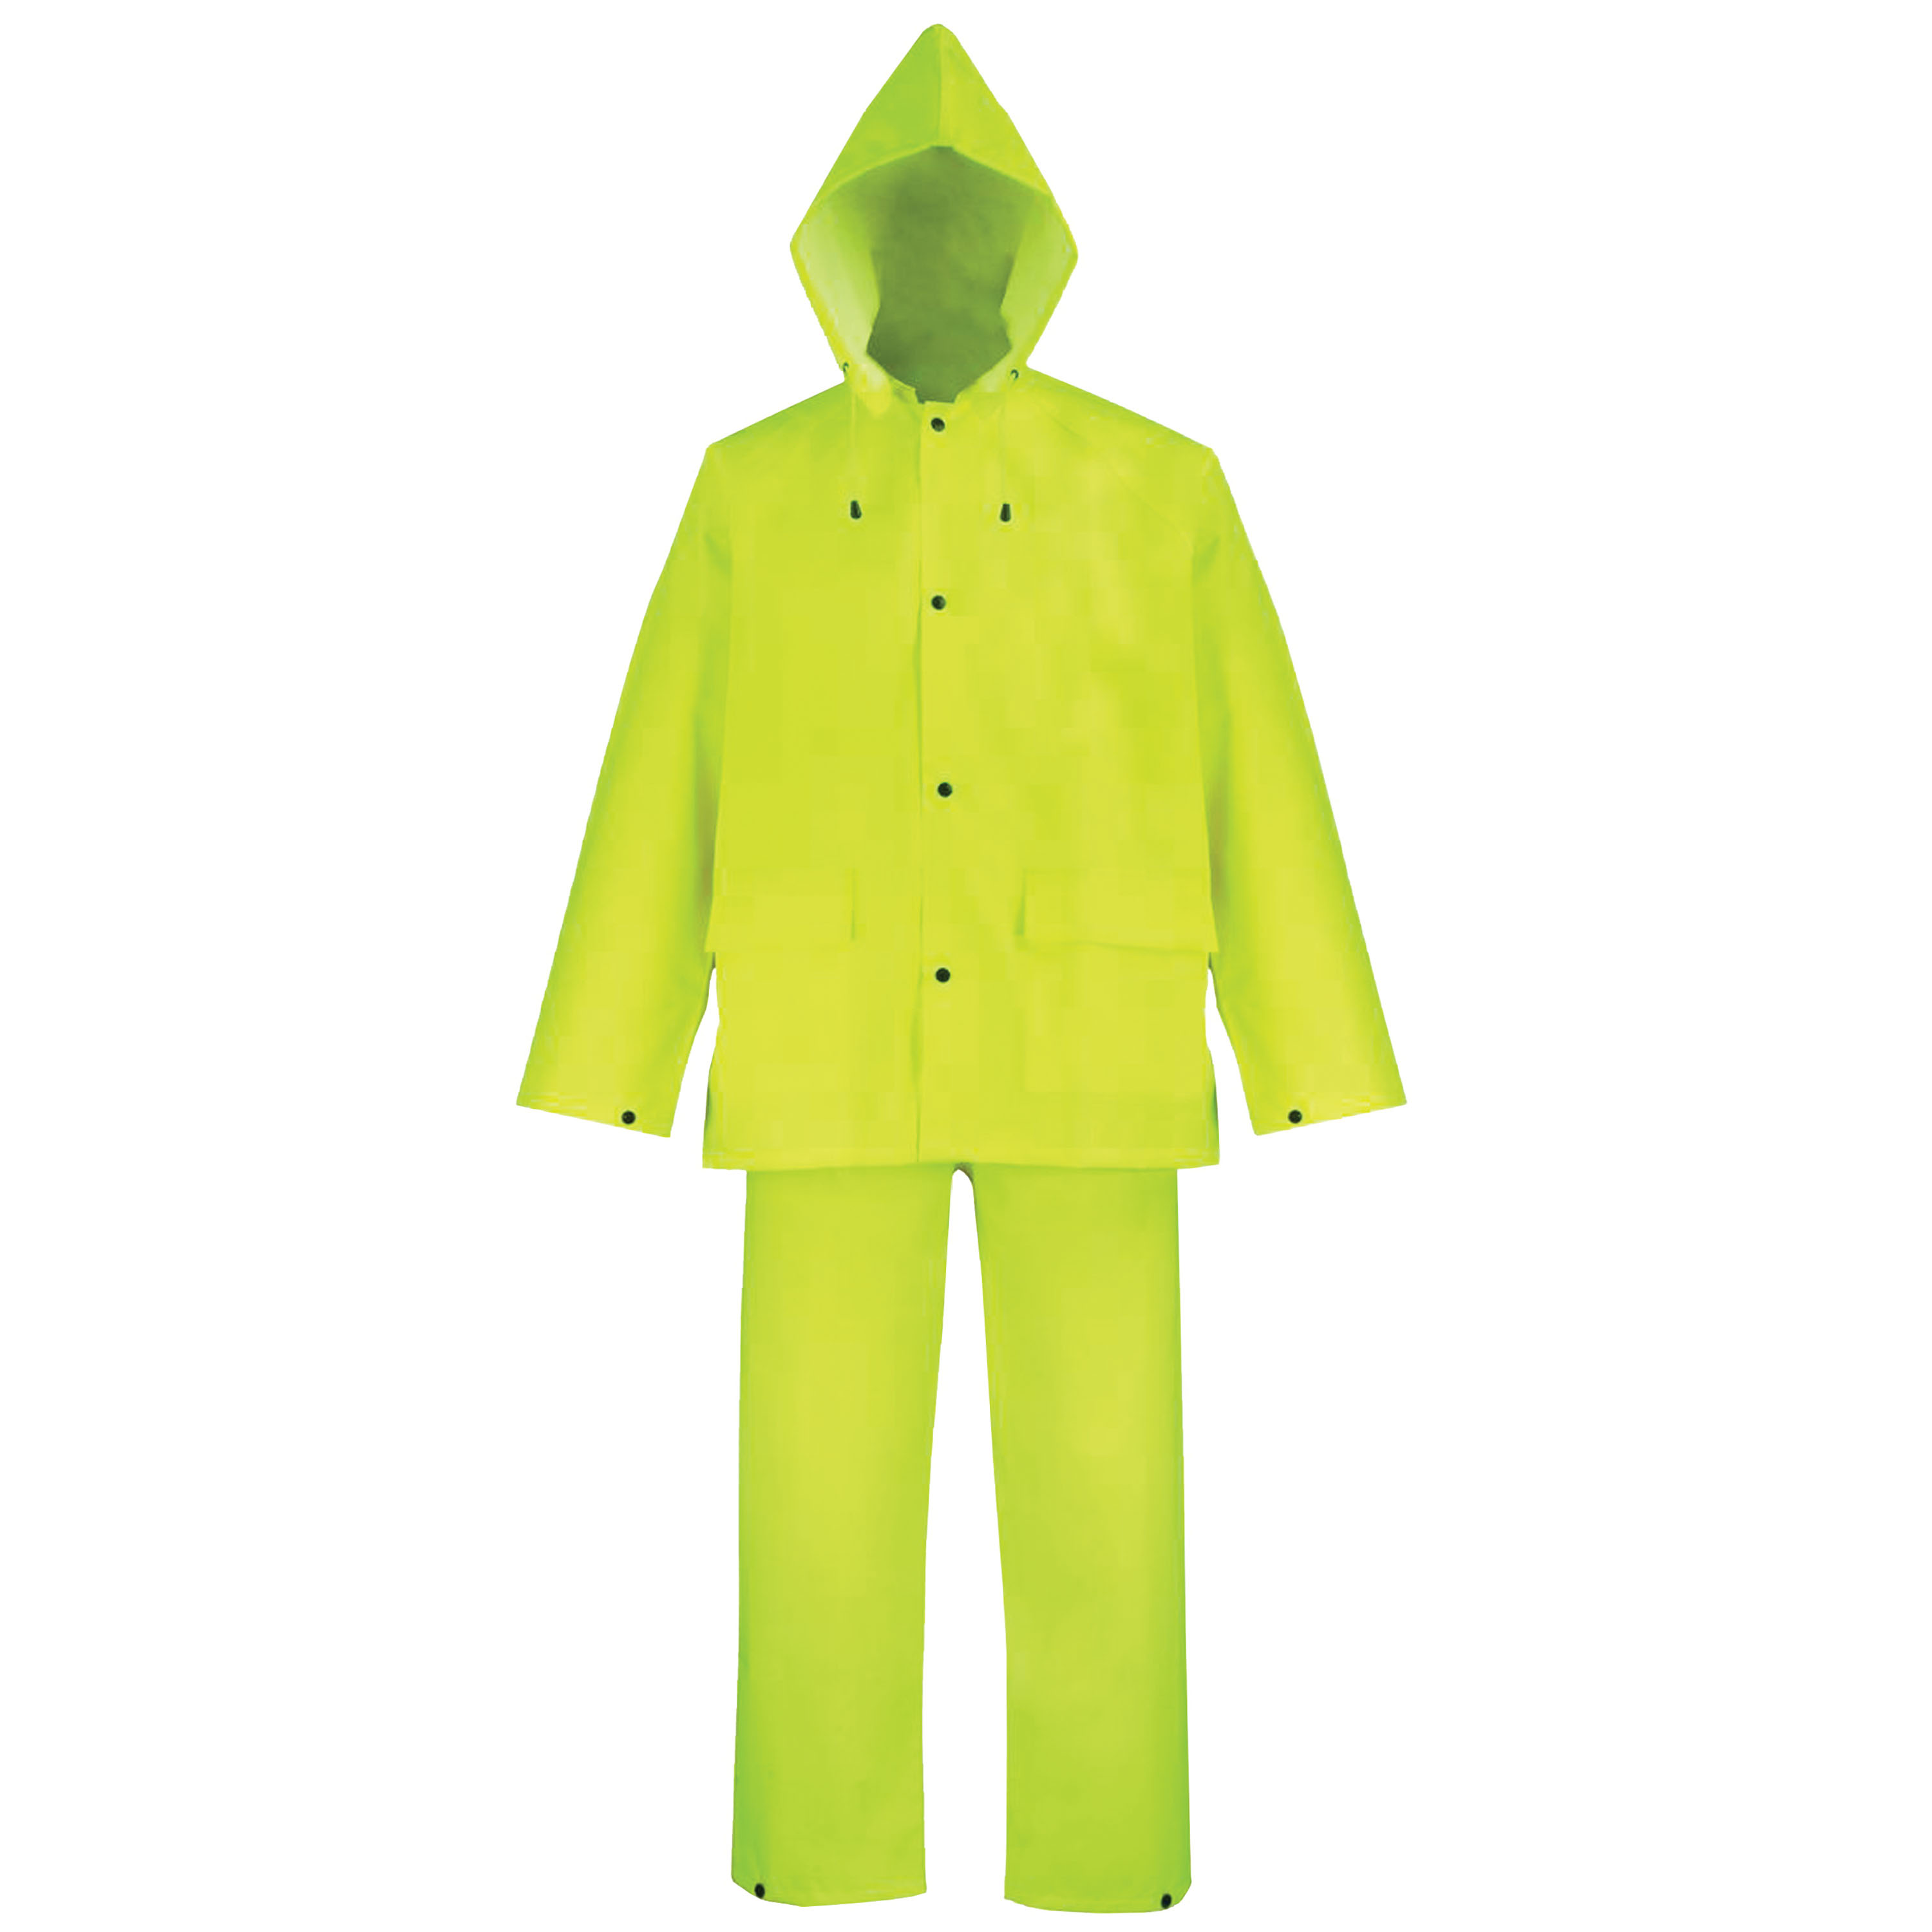 OX025PU-XXL Rain Suit, 2XL, 31 in Inseam, Polyester, Hi-Viz Yellow, Comfortable Oxford Polyester Collar